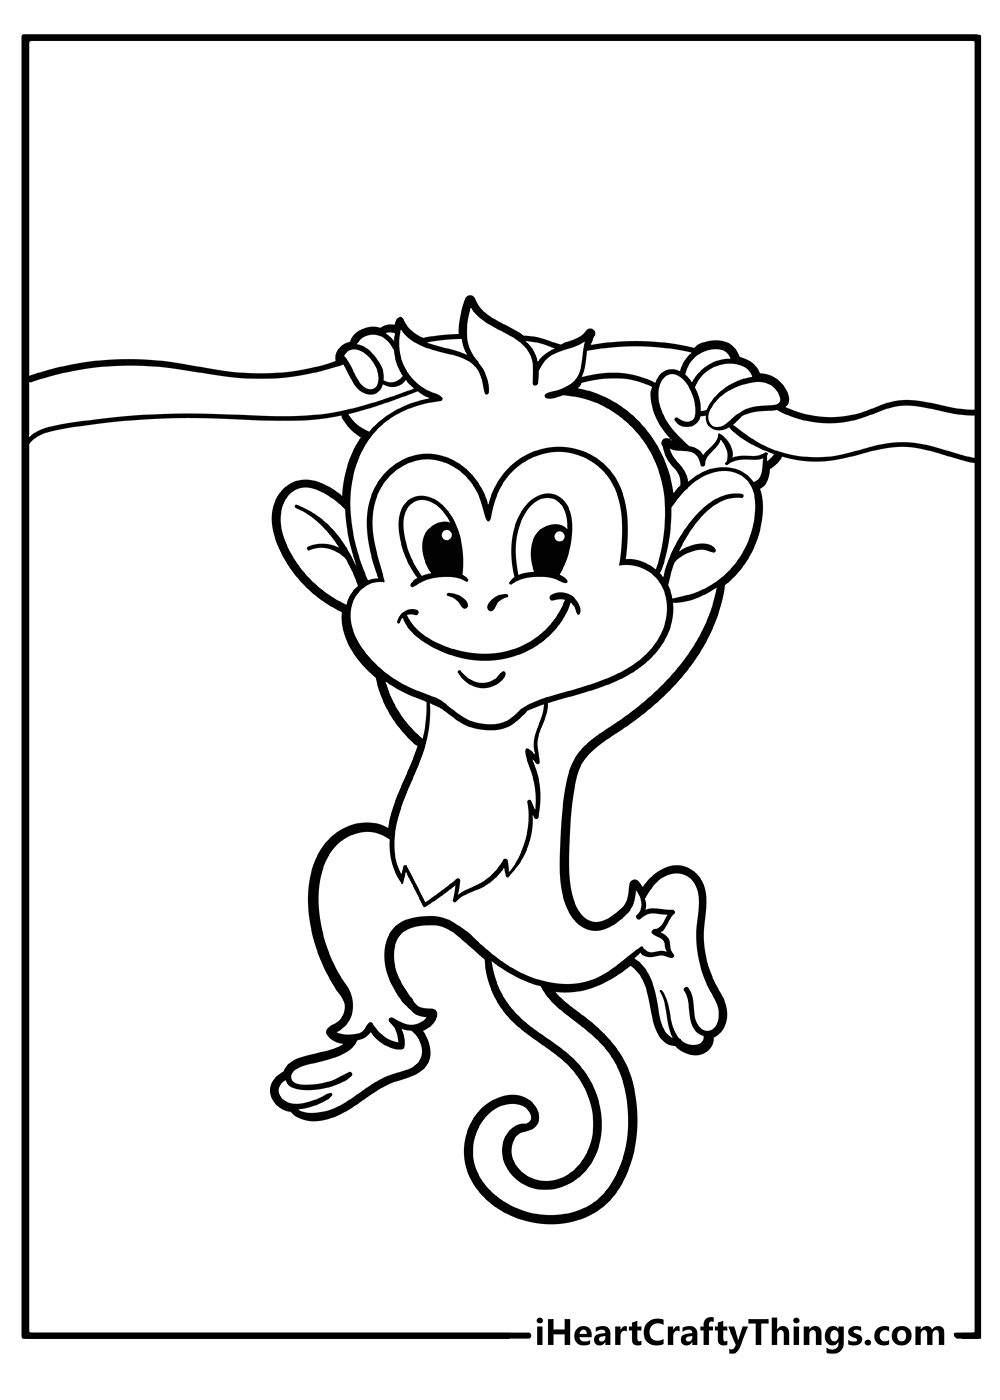 Monkey Drawing - Etsy